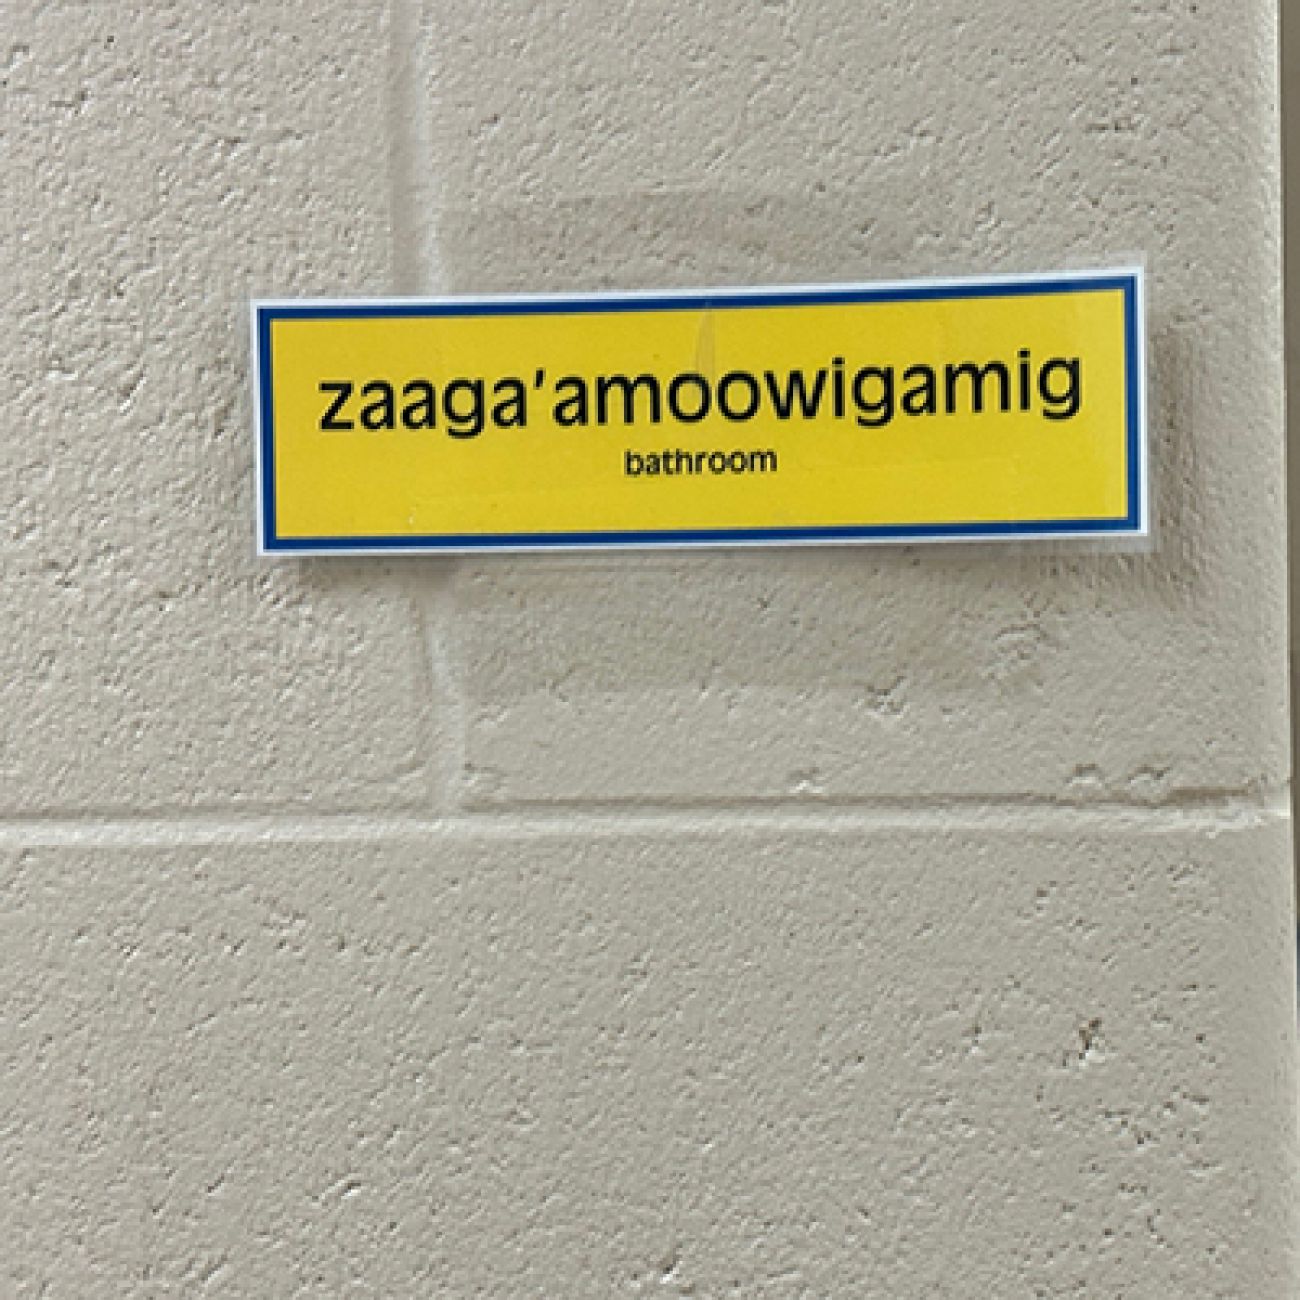 a sign that says zaaga'amoowigamig, which means bathroom